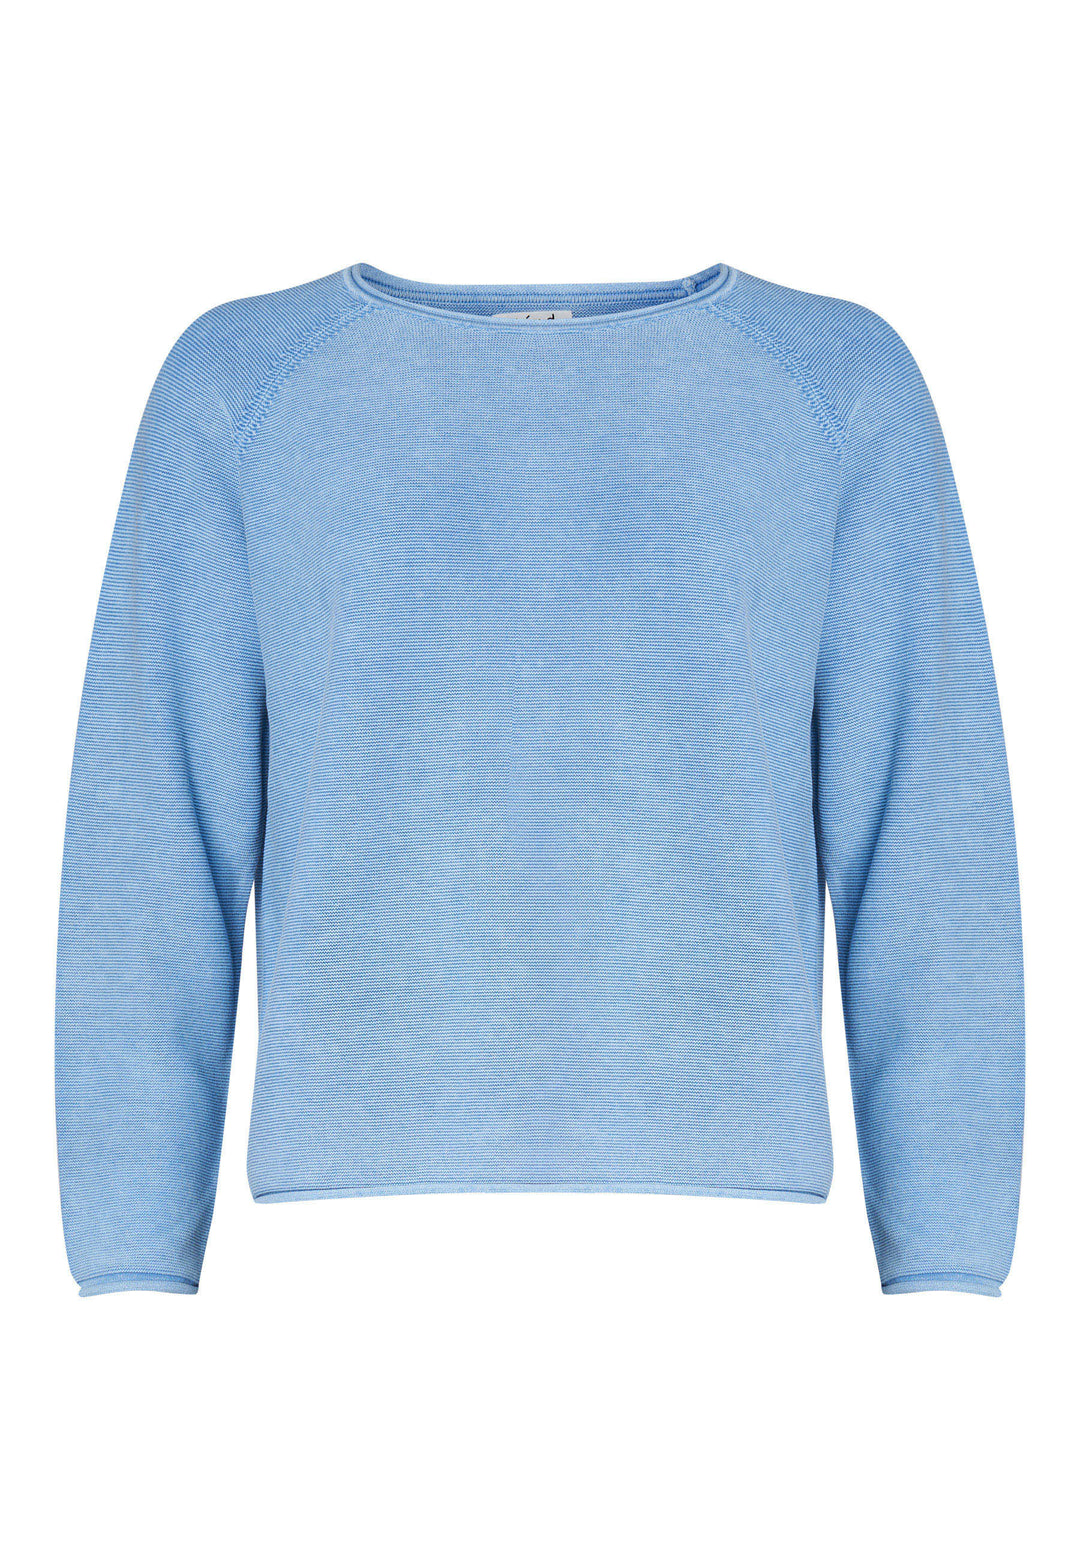 Lind LiAbigale Knit Pullover 5300 Cornflower Blue